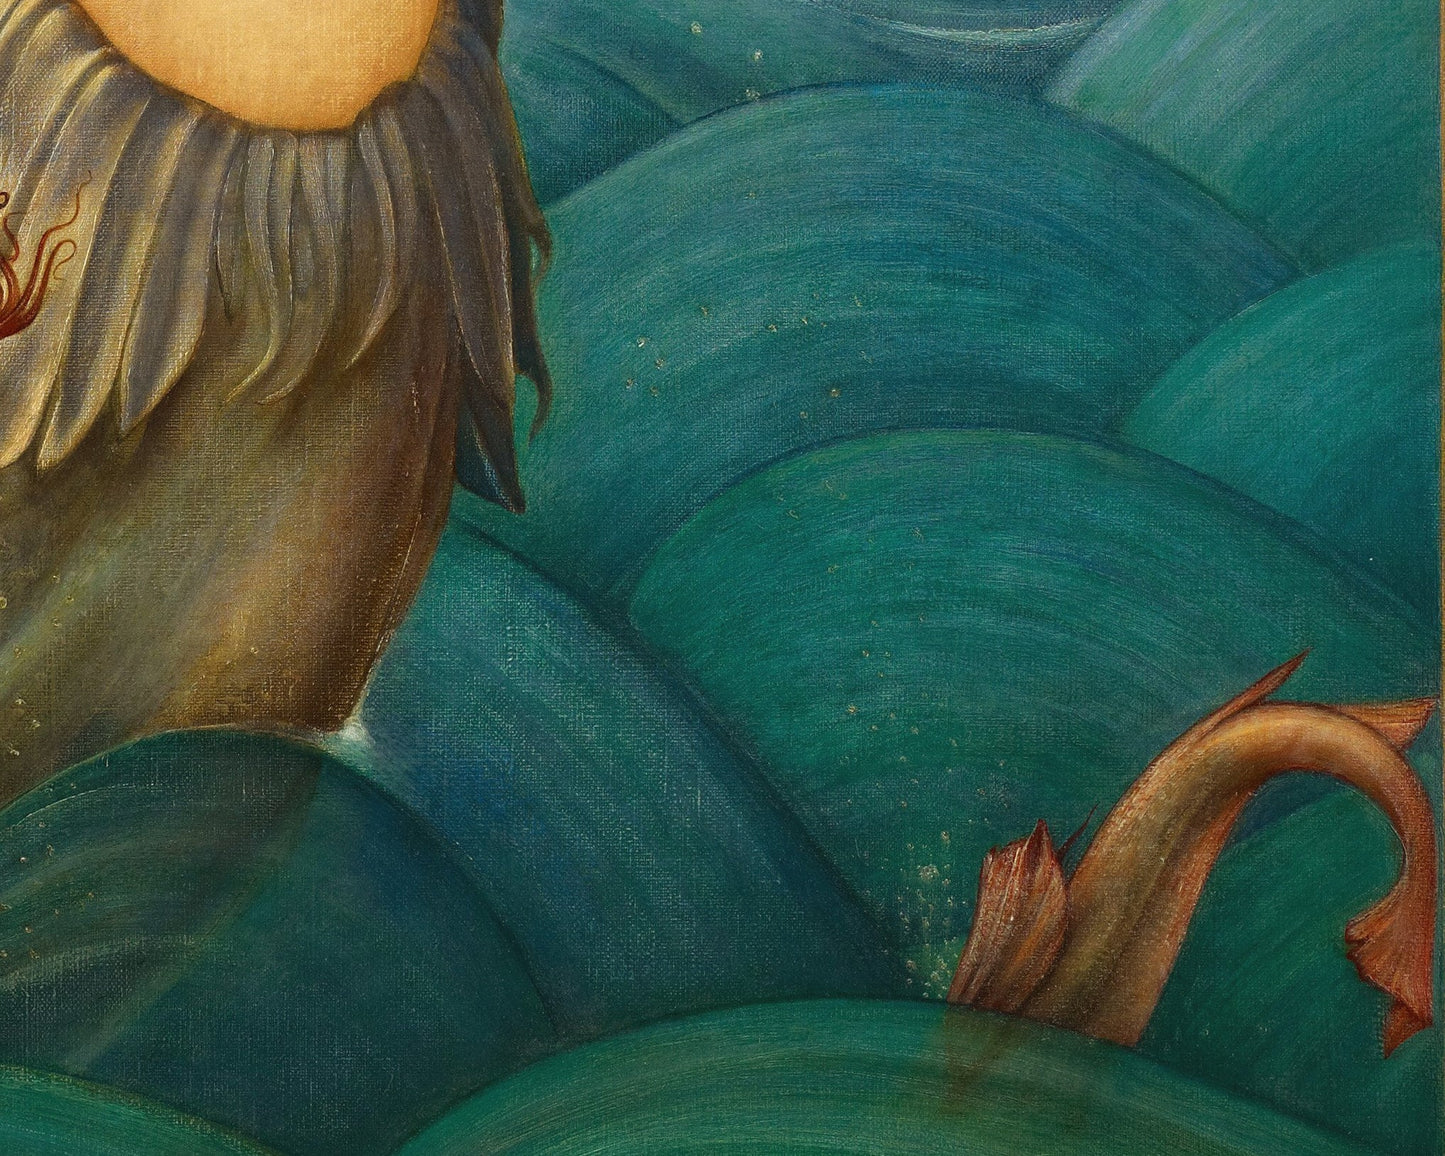 Vintage mermaid art print | Sea Nymph | Nude female painting | Nautical wall art | Art nouveau | Pre-Raphaelite | Edward Coley Burne-Jones